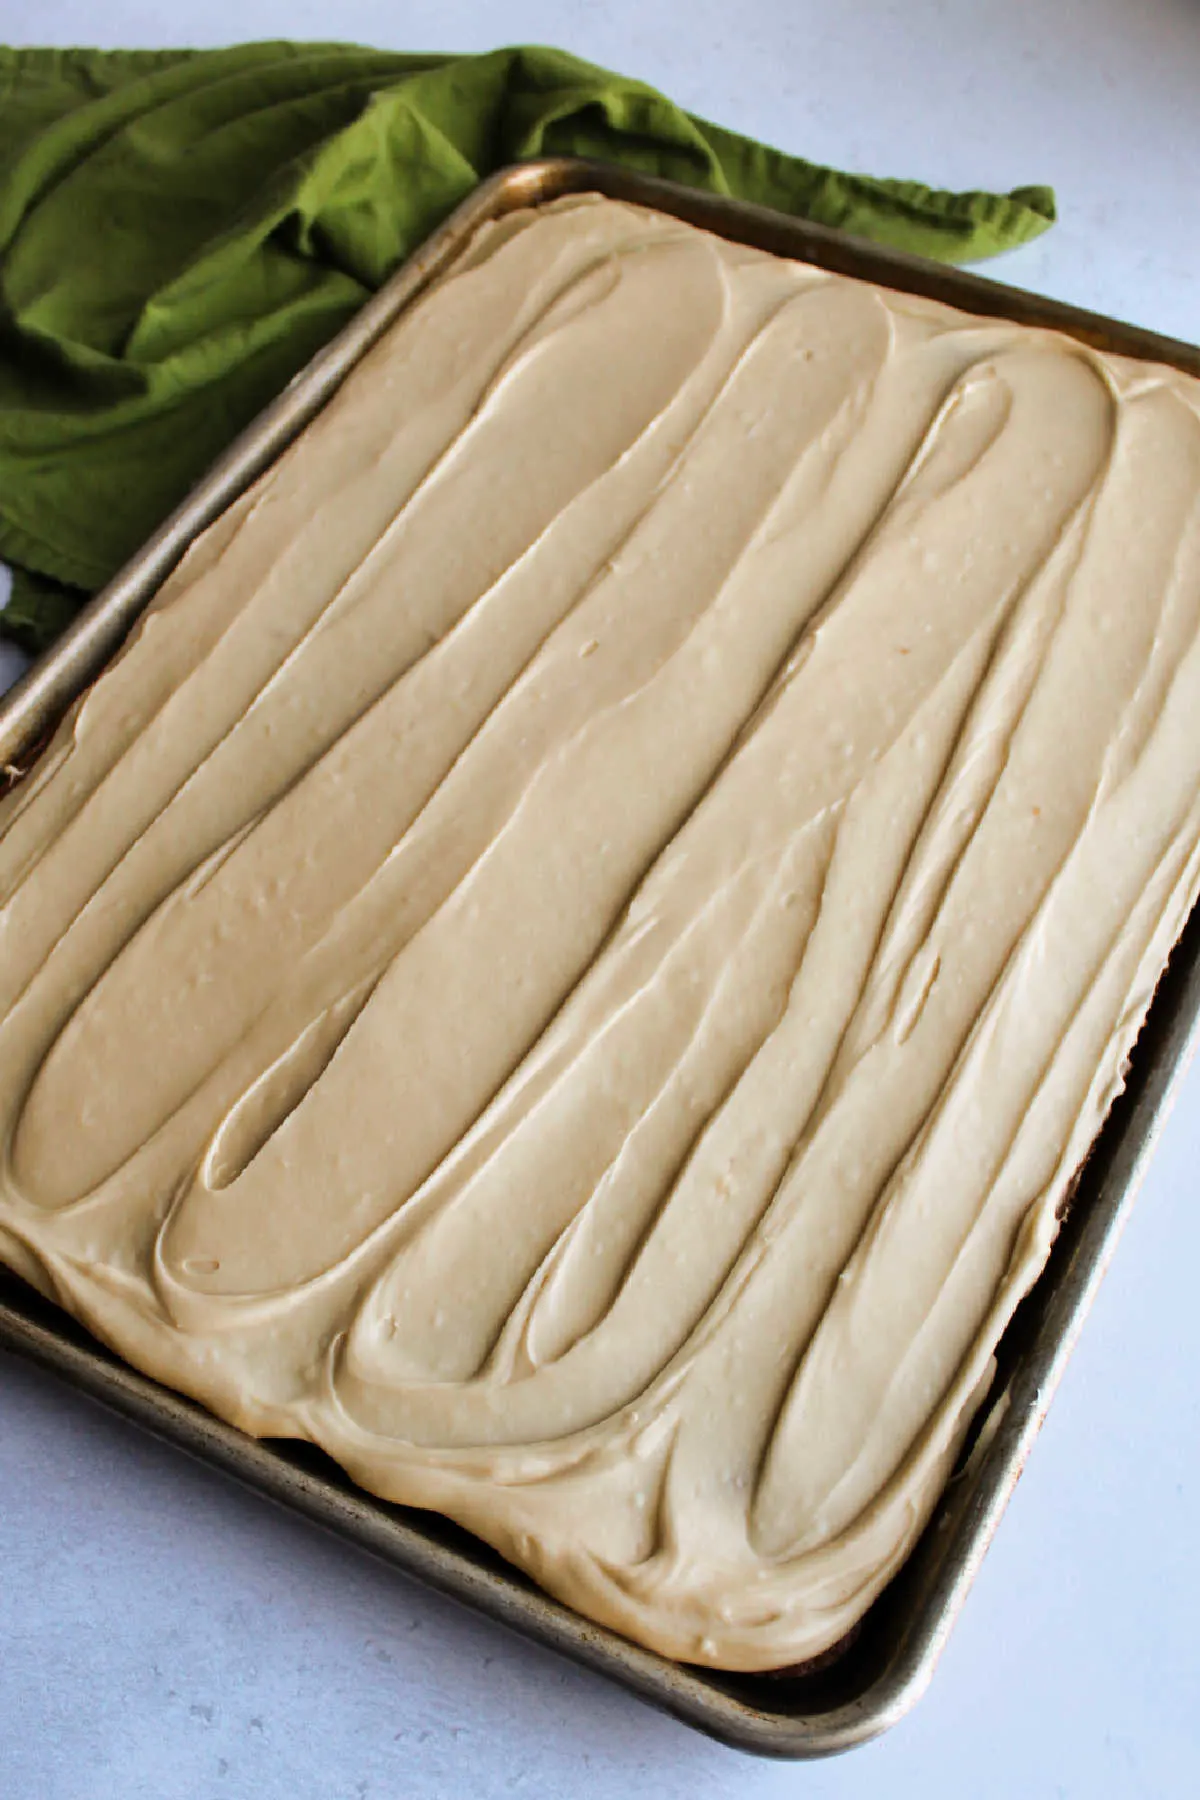 Tan brown sugar icing spread over cake in sheet pan.